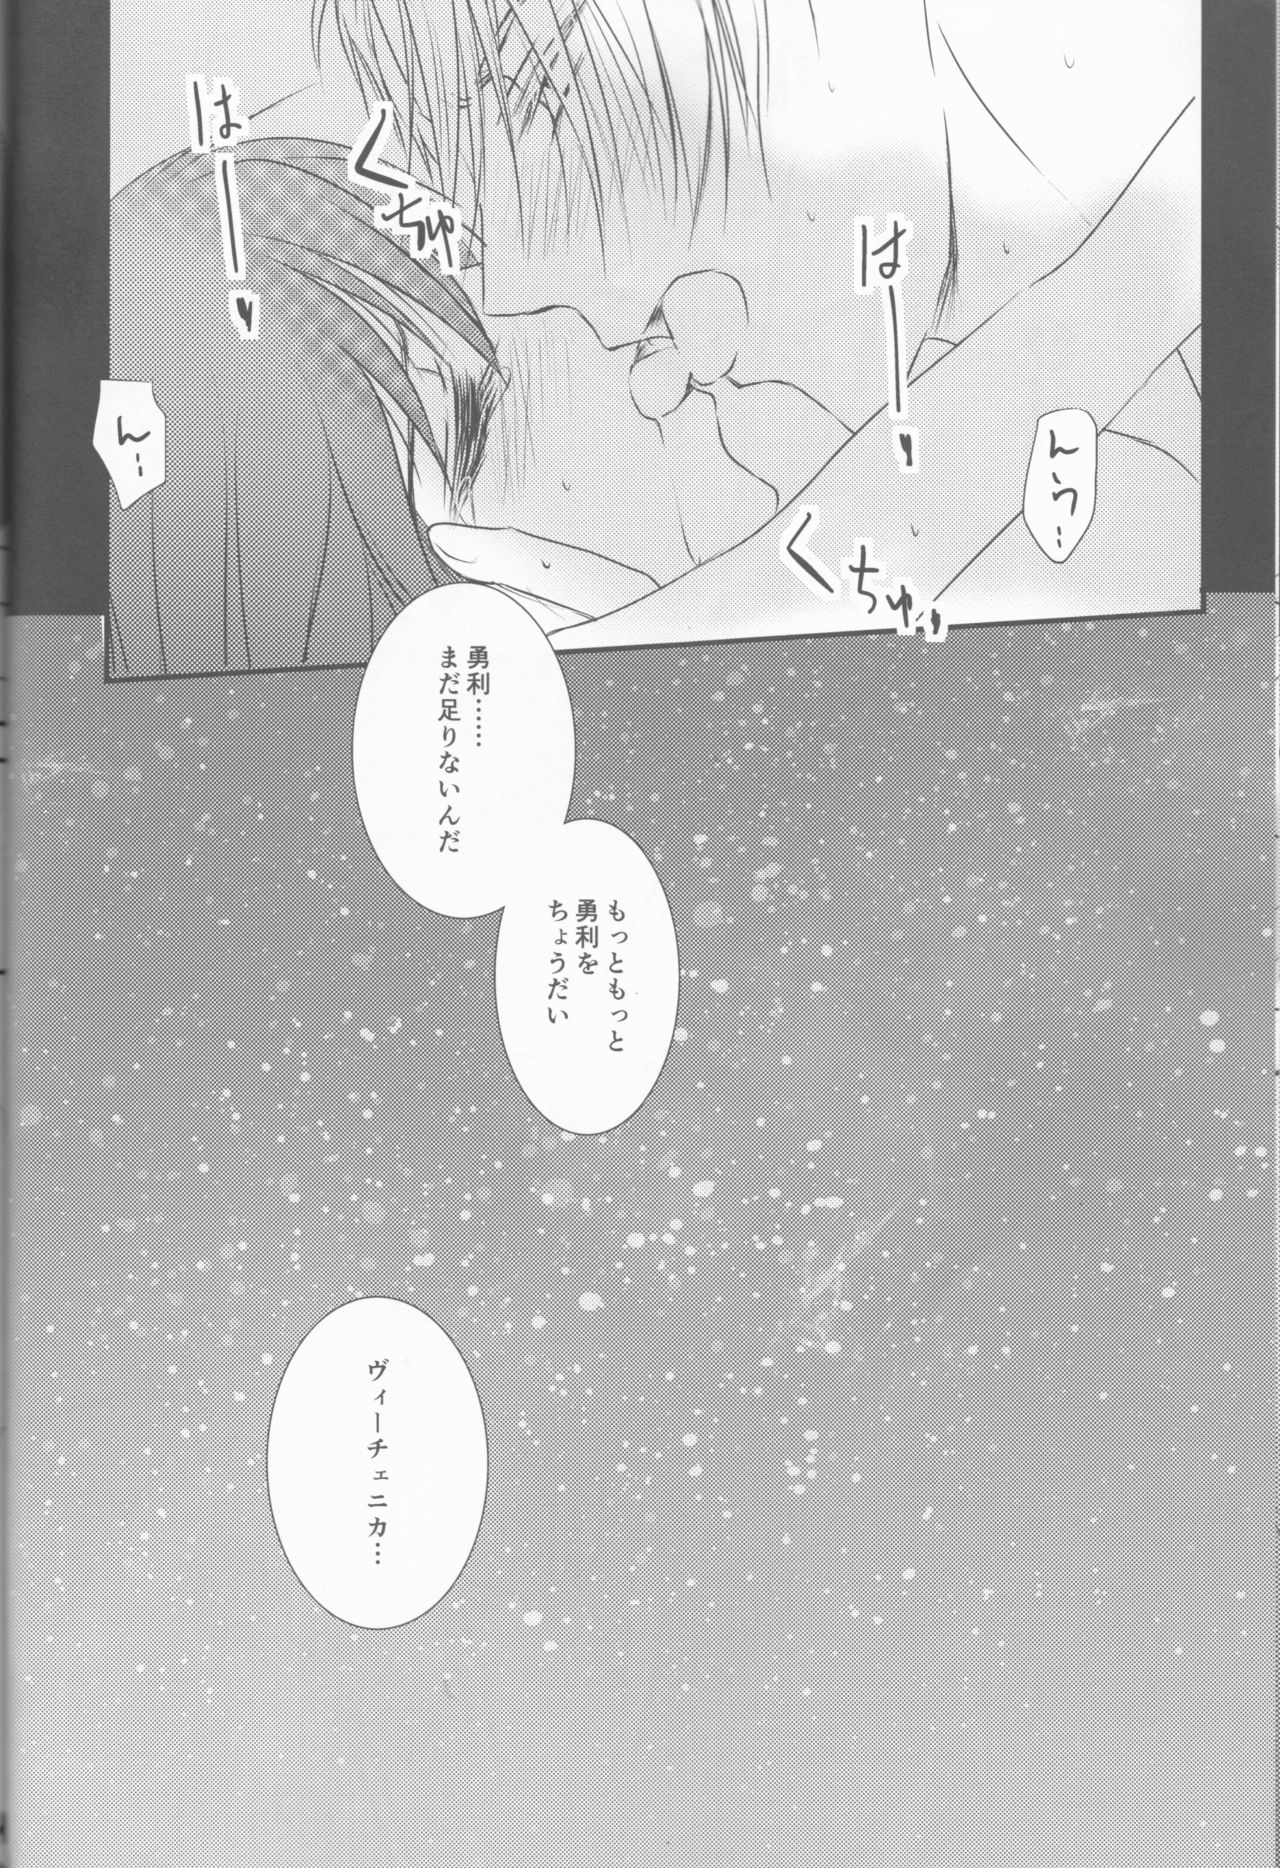 (HARUCC22) [GETTSU (げっちゅー)]	Please keep holding my hands (ユーリ!!! on ICE)